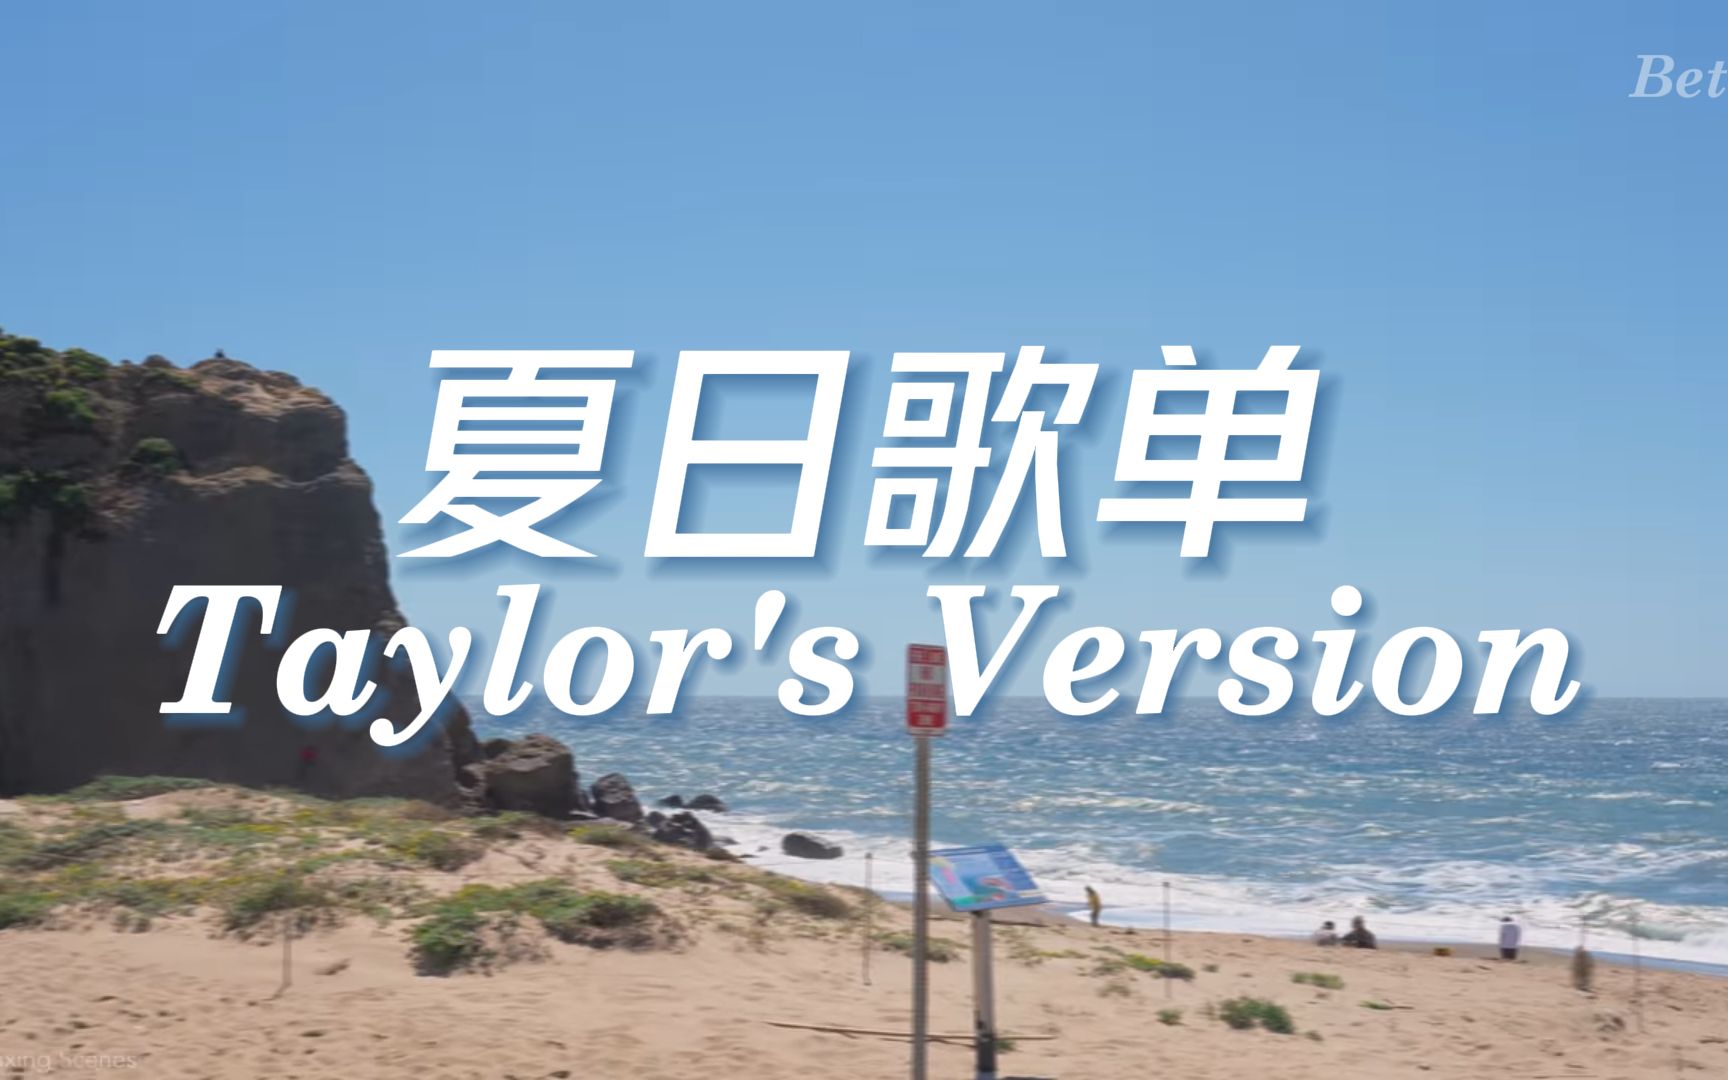 【Taylor Swift】夏日在加州海岸兜风听Taylor's Version的夏日歌单